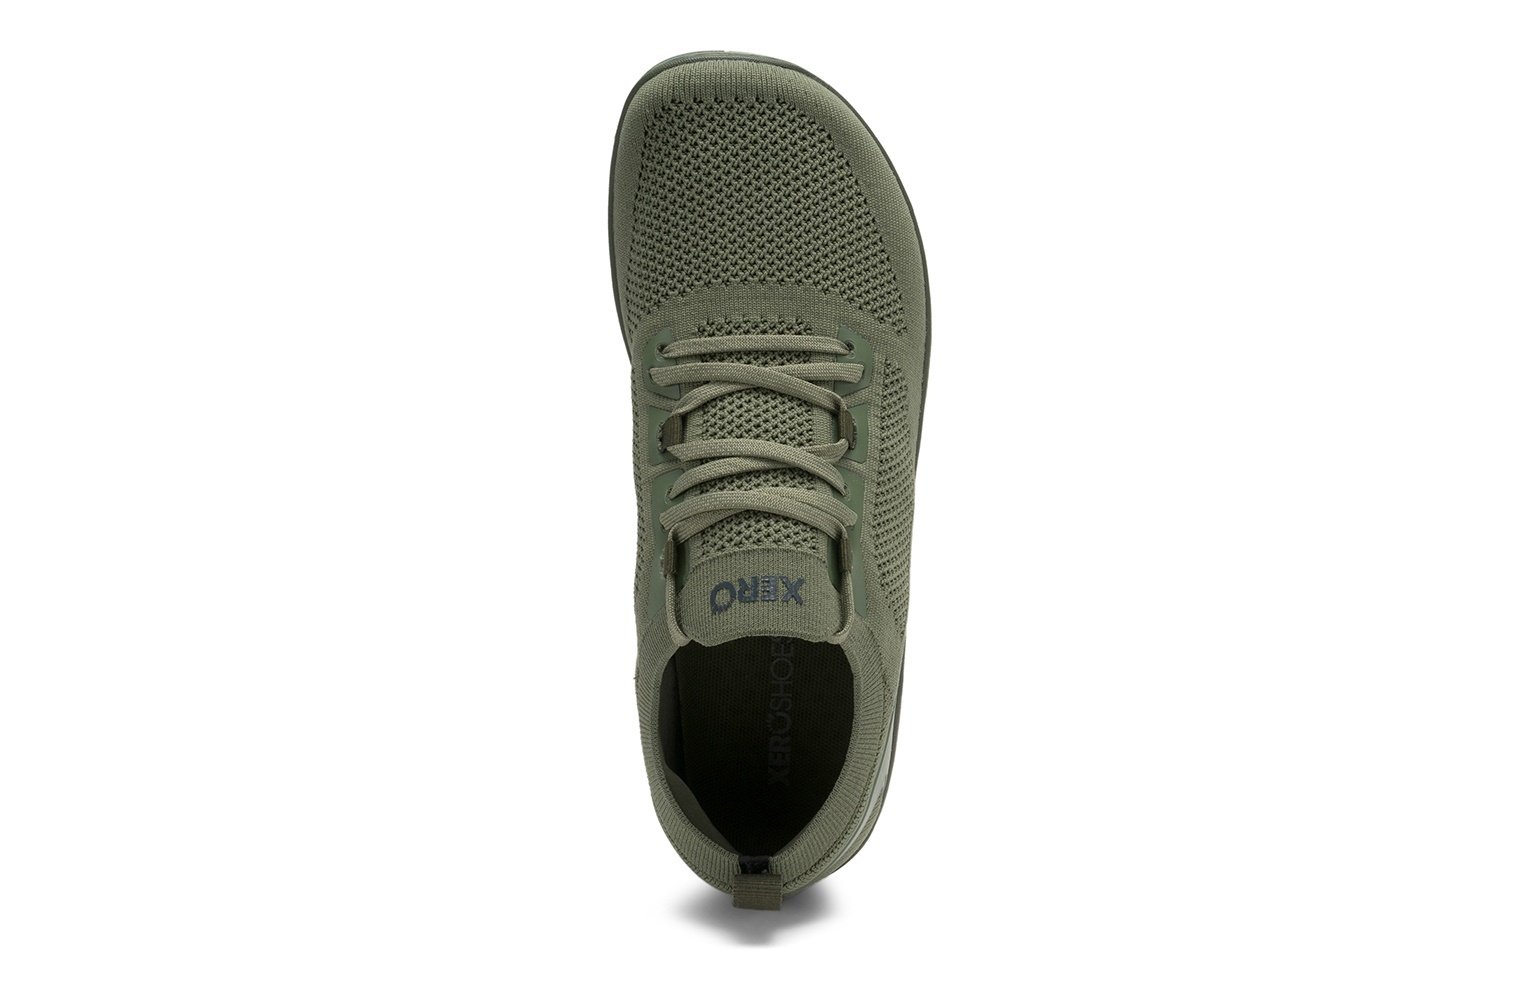 Xero Shoes, Nexus Knit - NEXM-OLIV - olive, heren, maat 42 eu